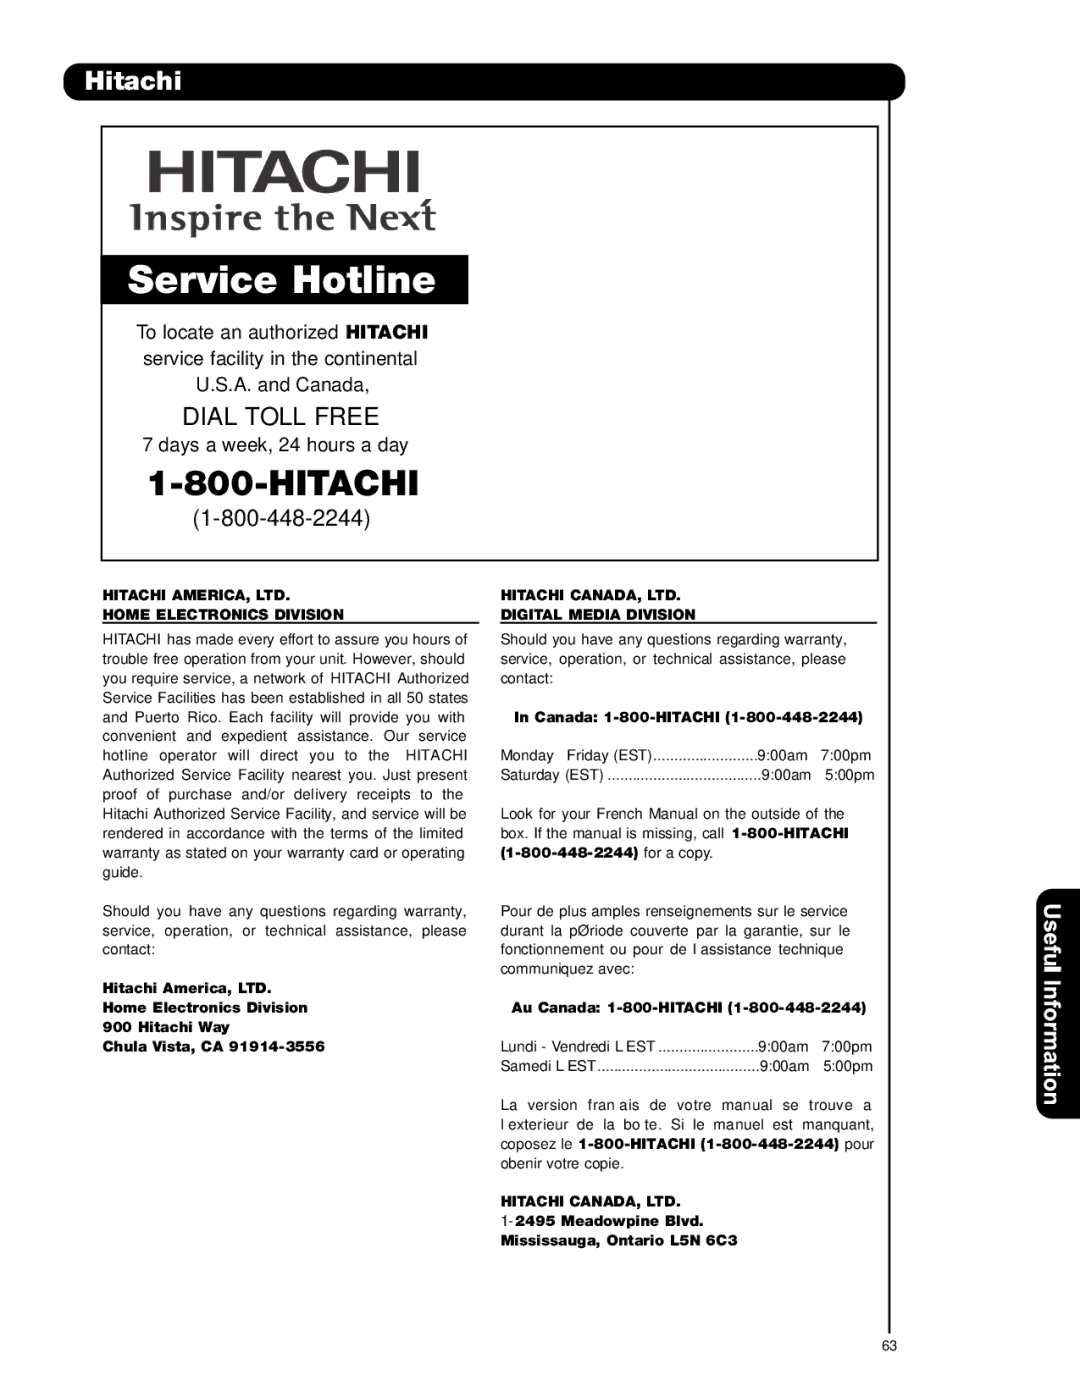 Hitachi P50H401A, P42H4011, P55H401 Hitachi, Home Electronics Division, Digital Media Division, Canada 1-800-HITACHI 